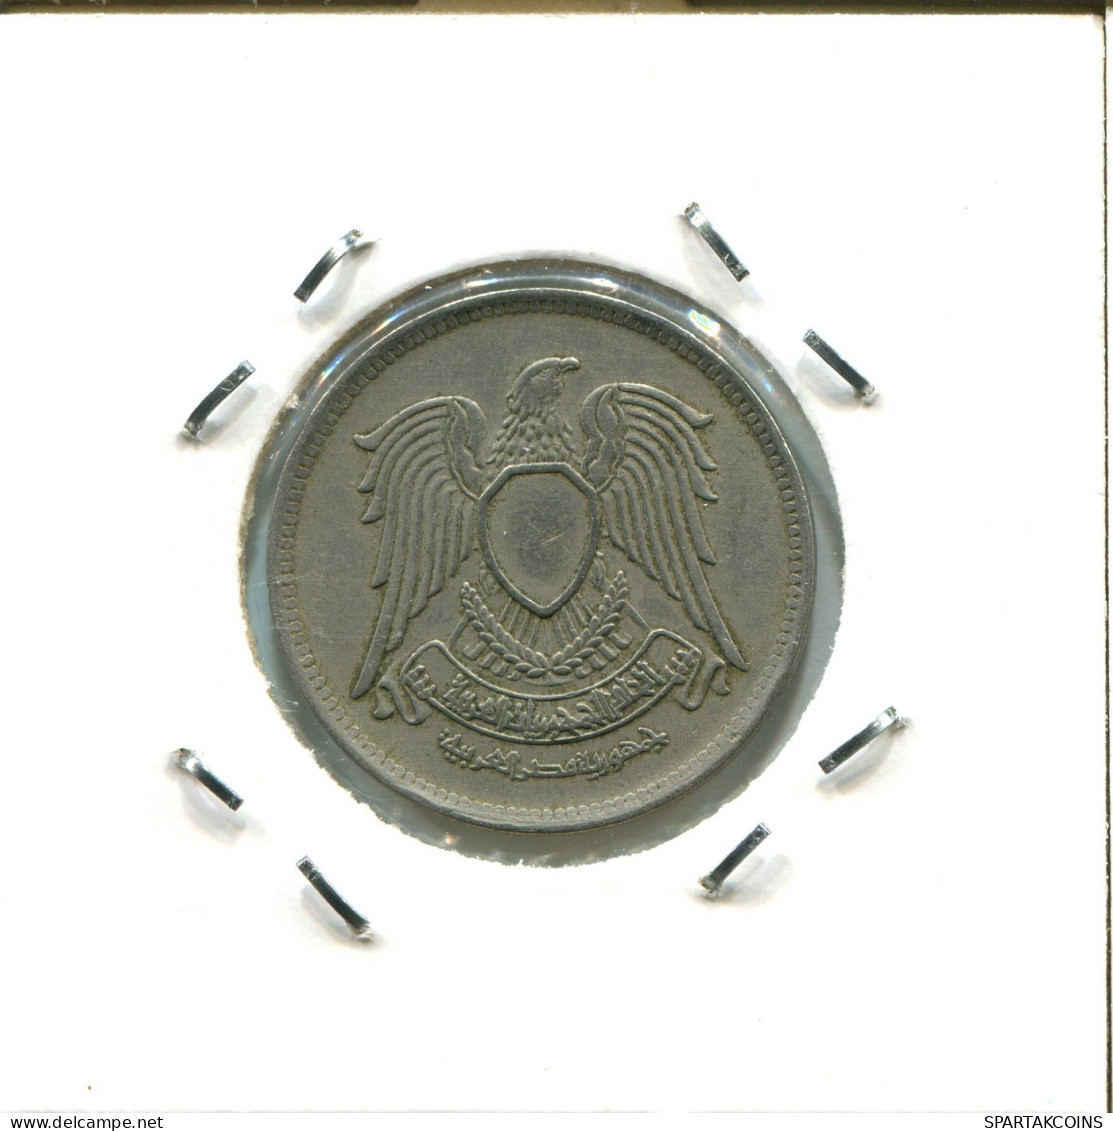 5 QIRSH 1972 EGIPTO EGYPT Islámico Moneda #AX242.E.A - Egipto